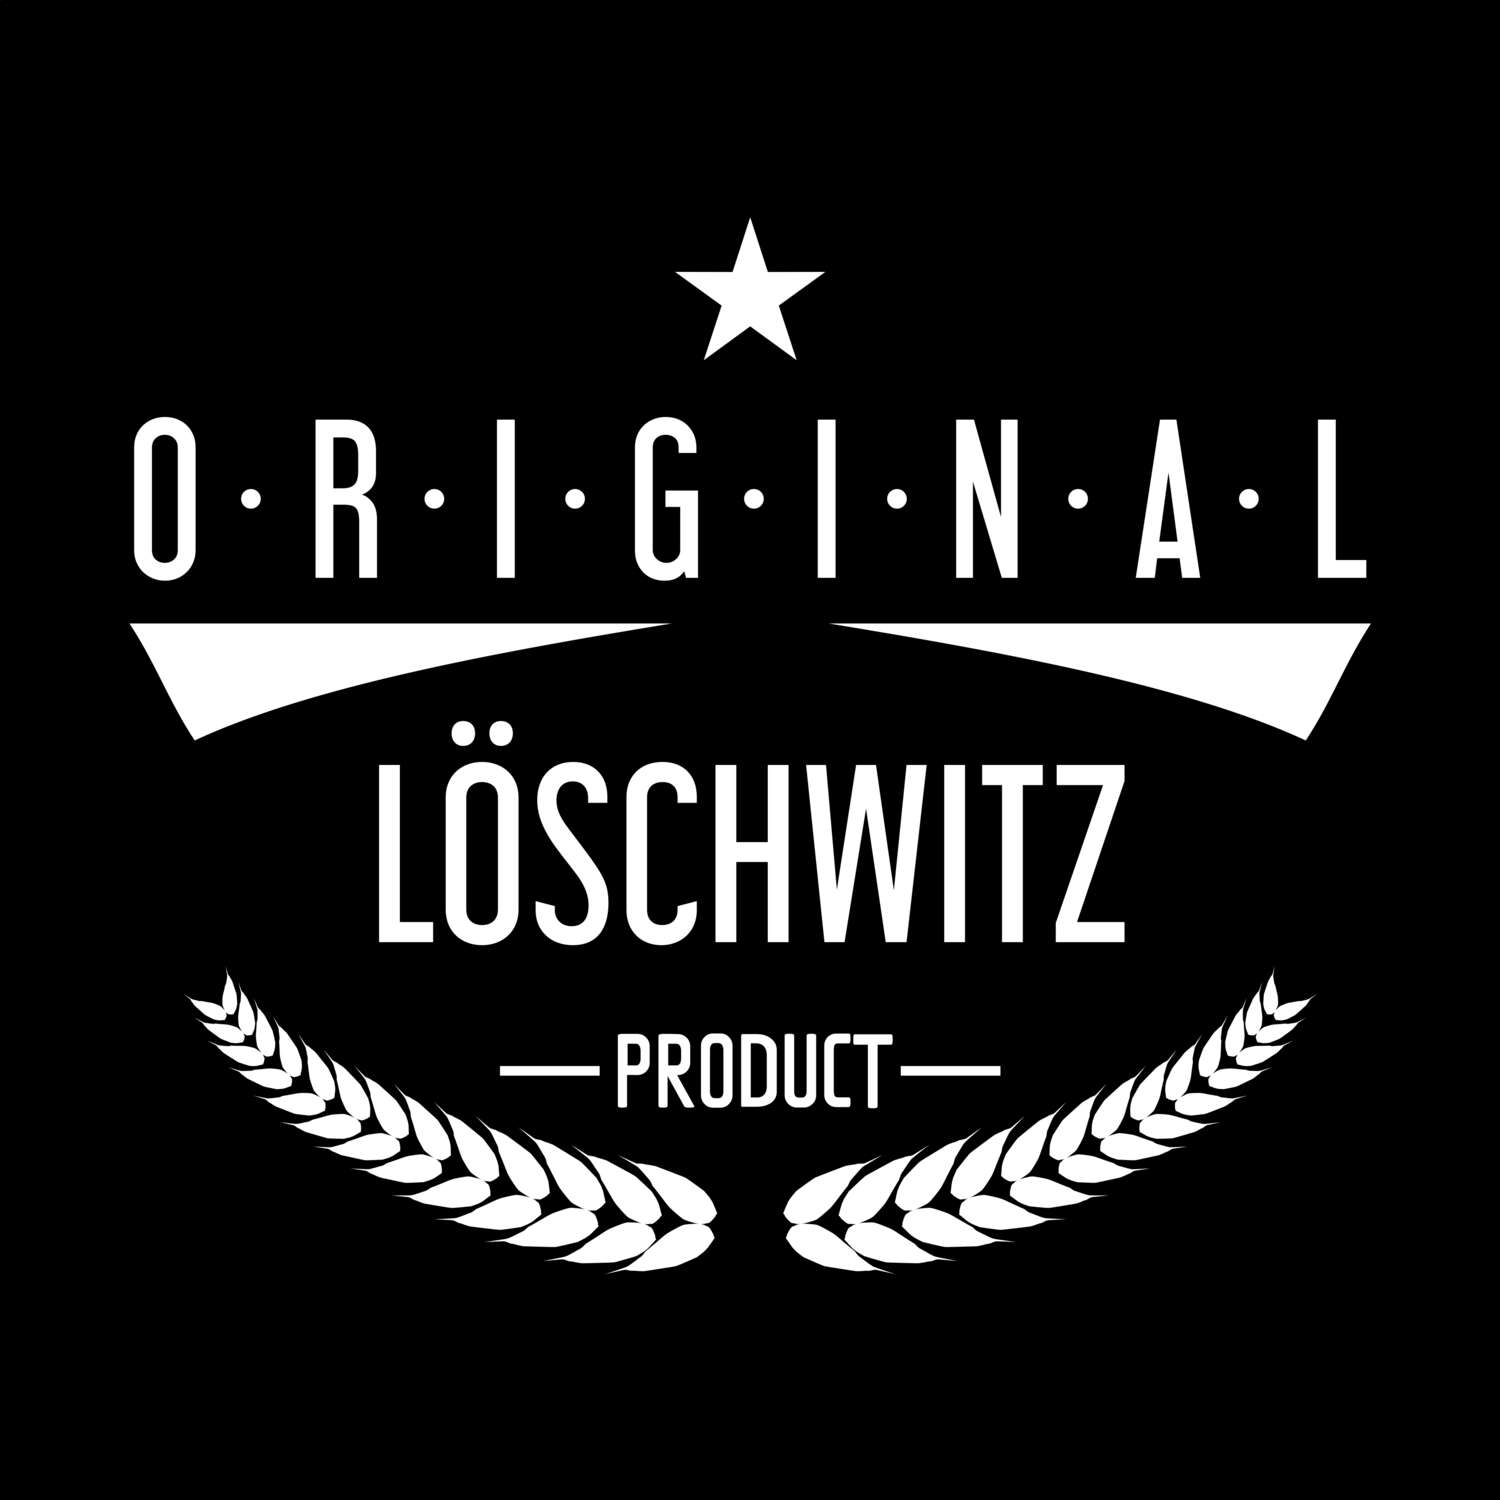 Löschwitz T-Shirt »Original Product«